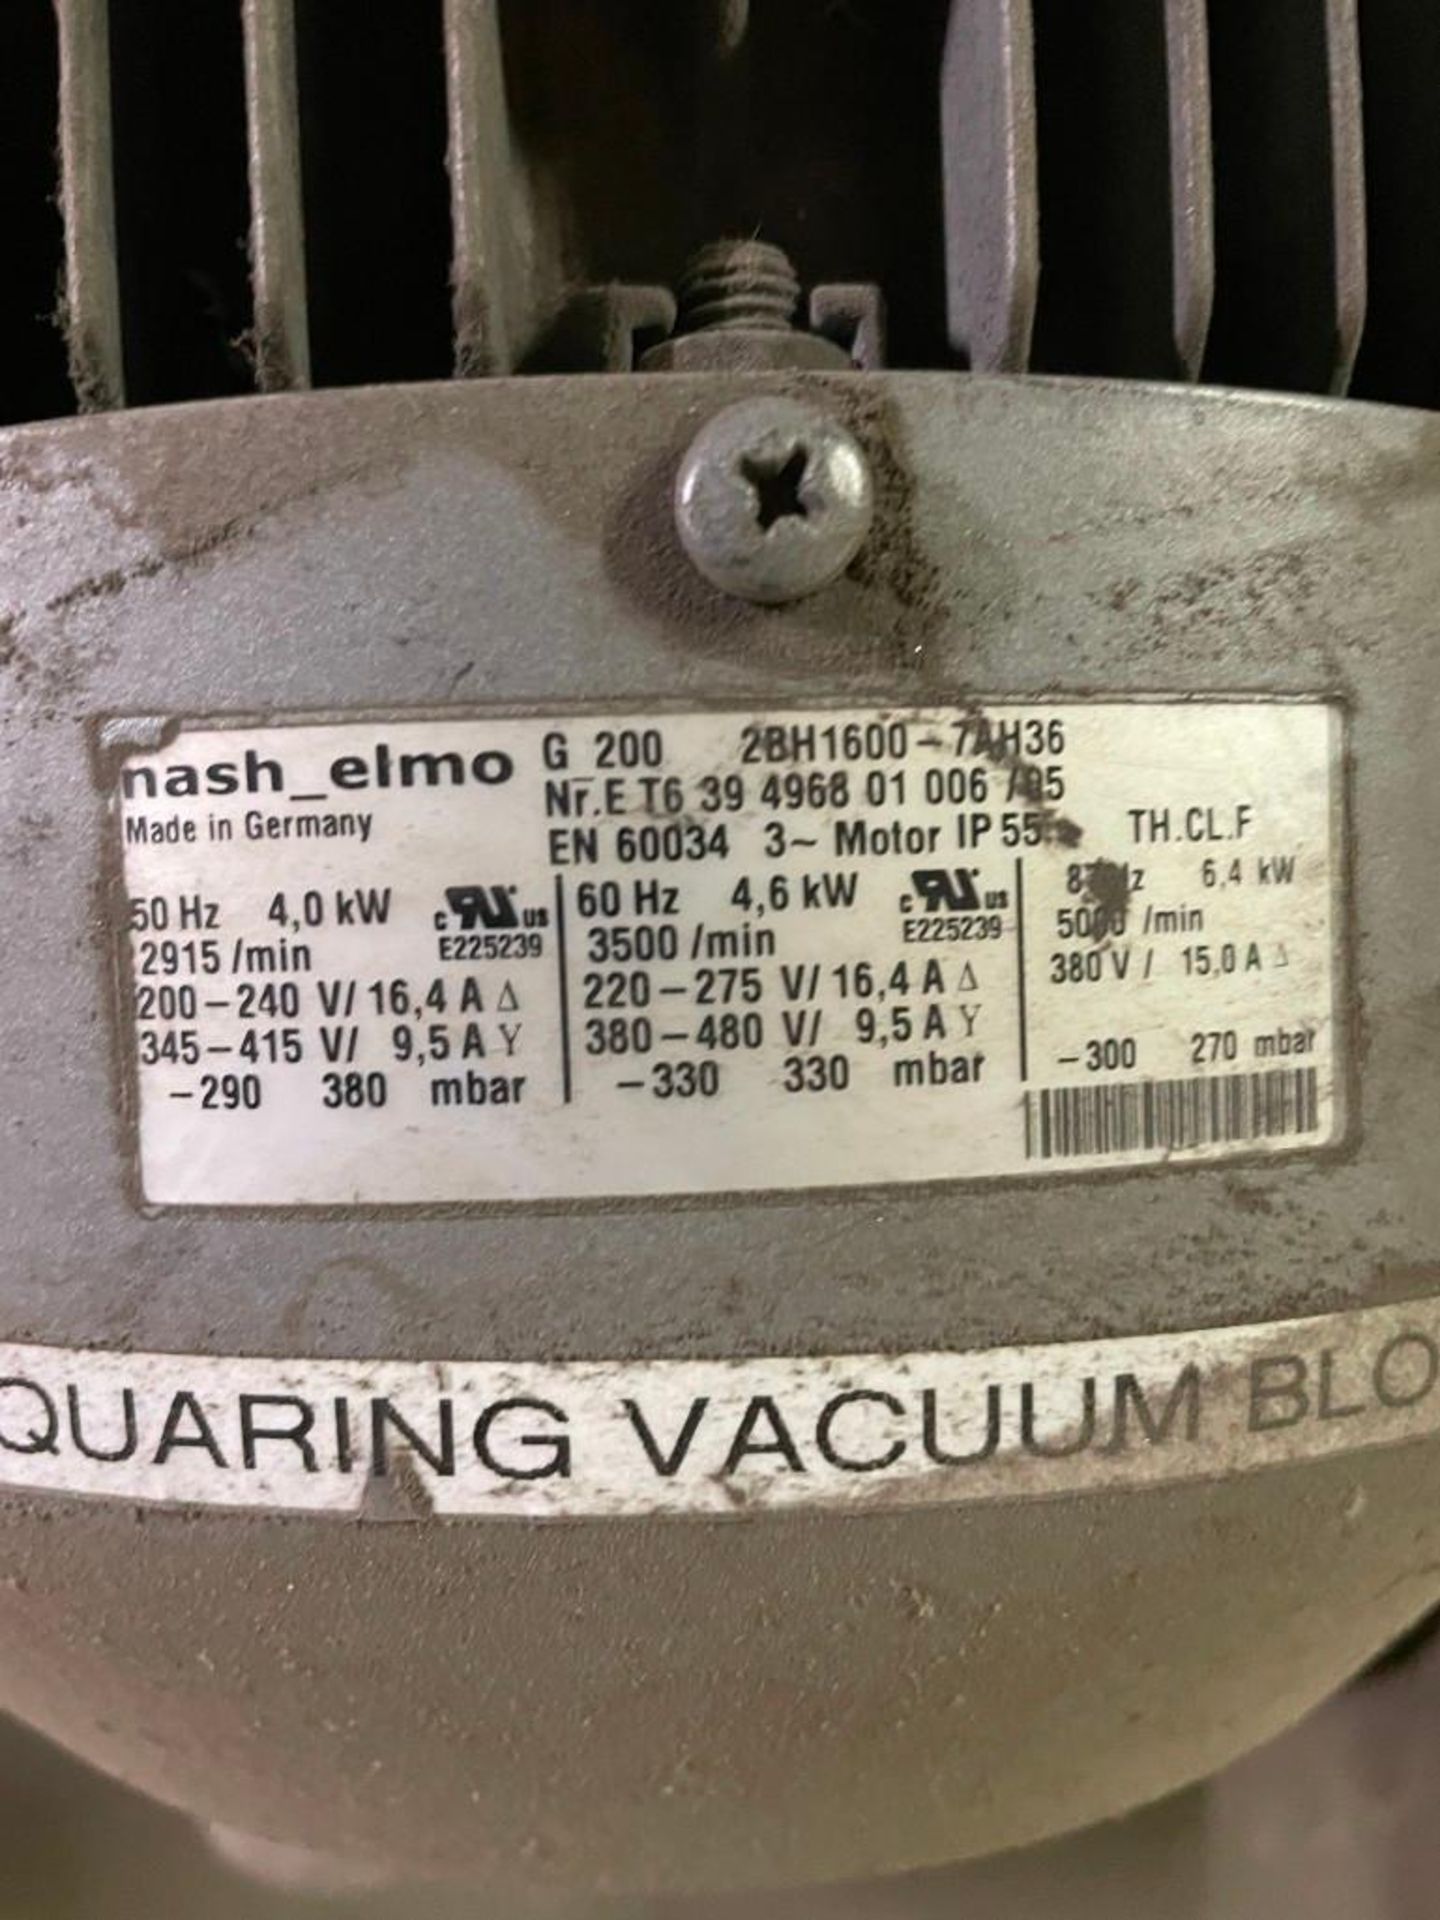 Nash Elmo Industries G200 Vacuum Blower 3 Ph Motor - Image 5 of 8